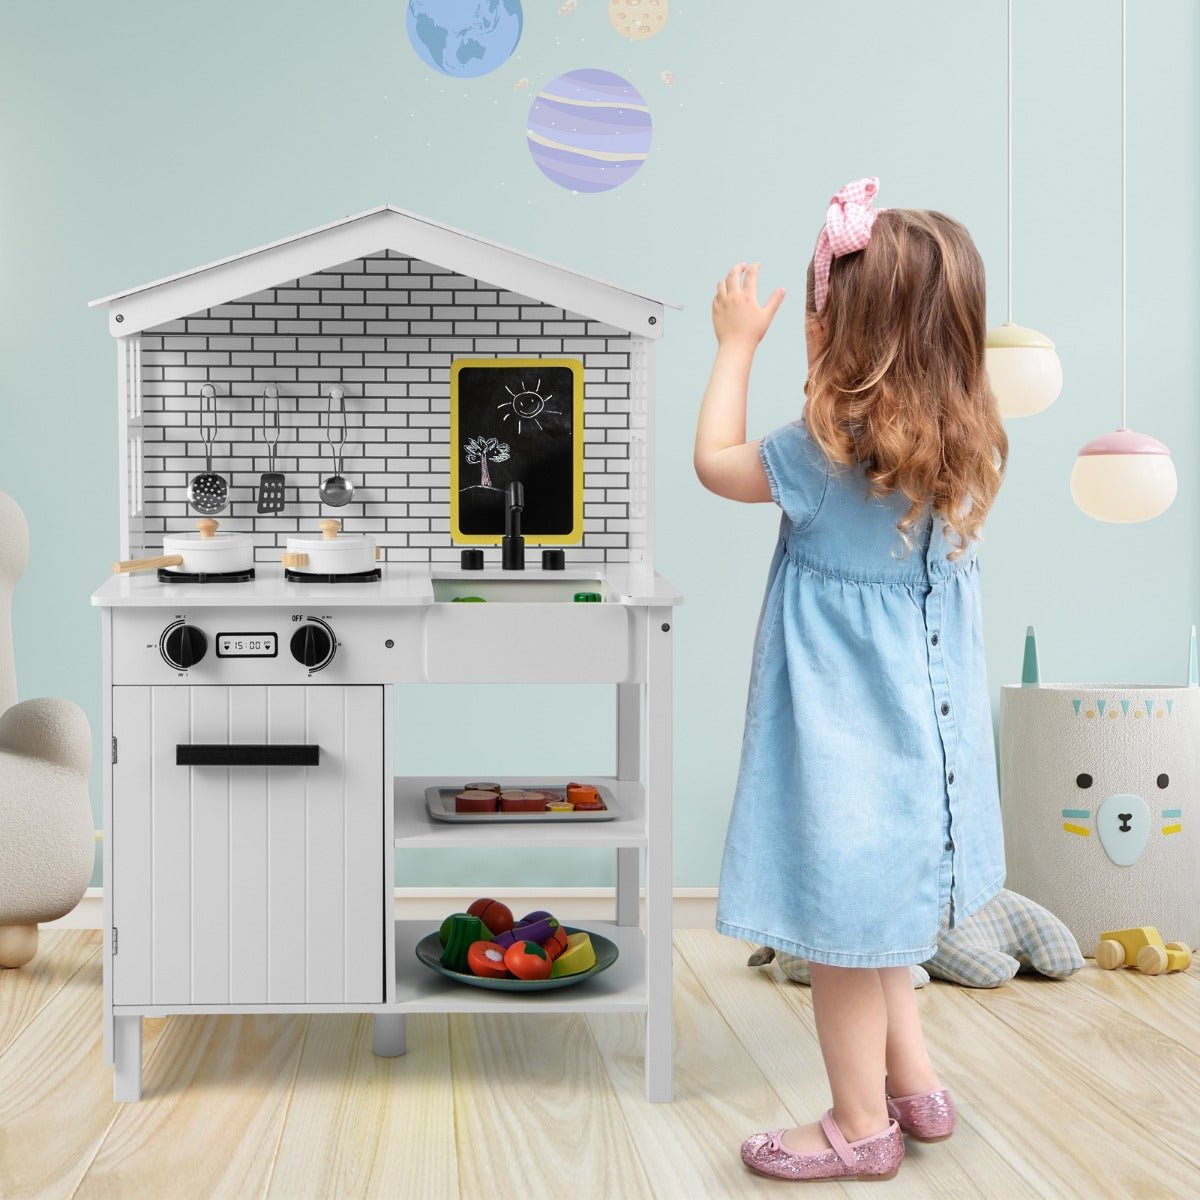 Buy the Farmhouse Wooden Play Kitchen Toy at Kids Mega Mart